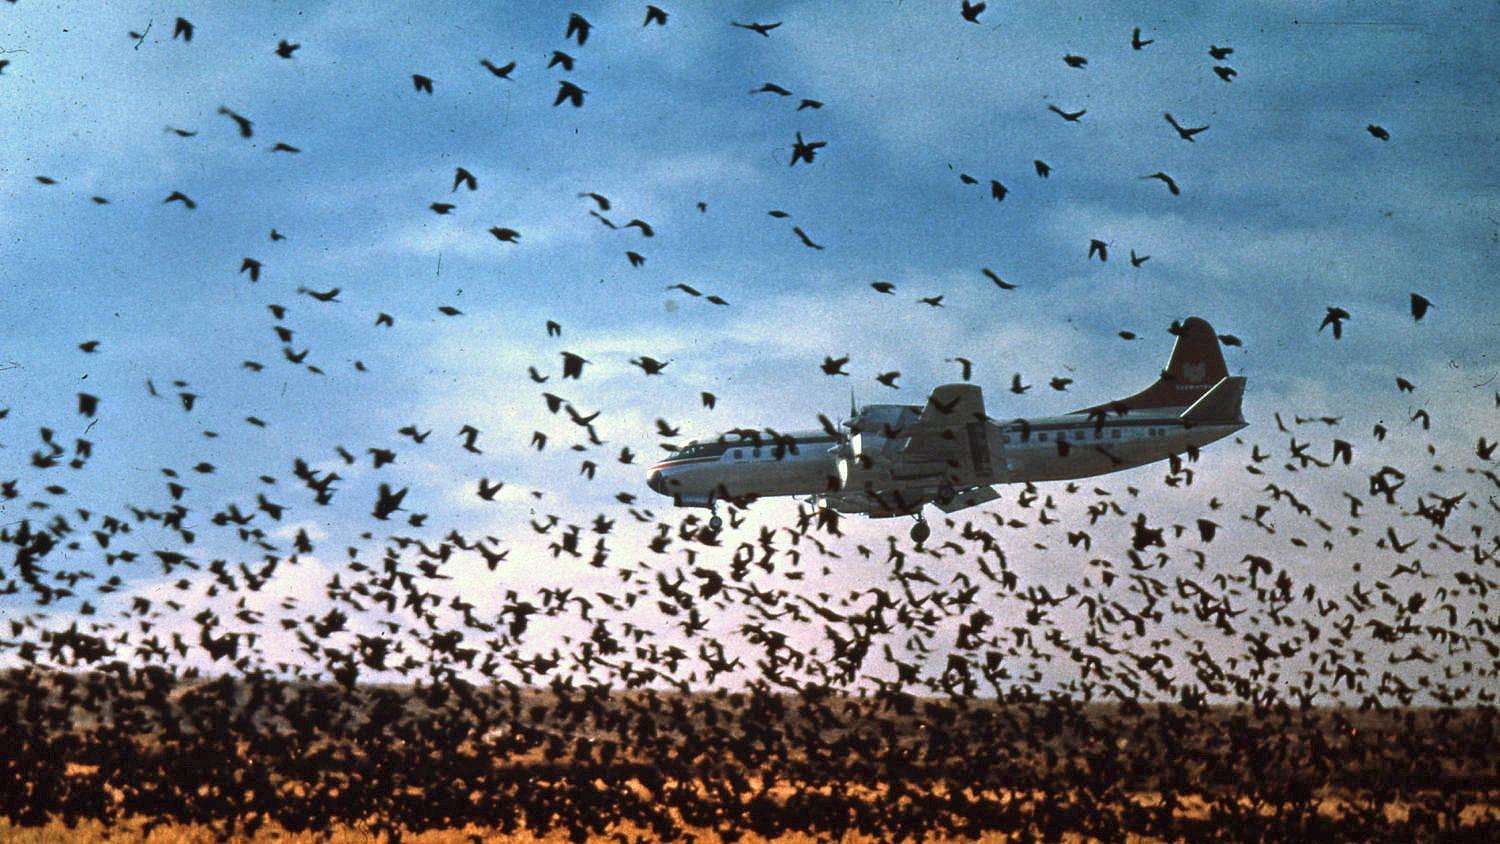 Plane landing as a flock of blackbirds takes flight